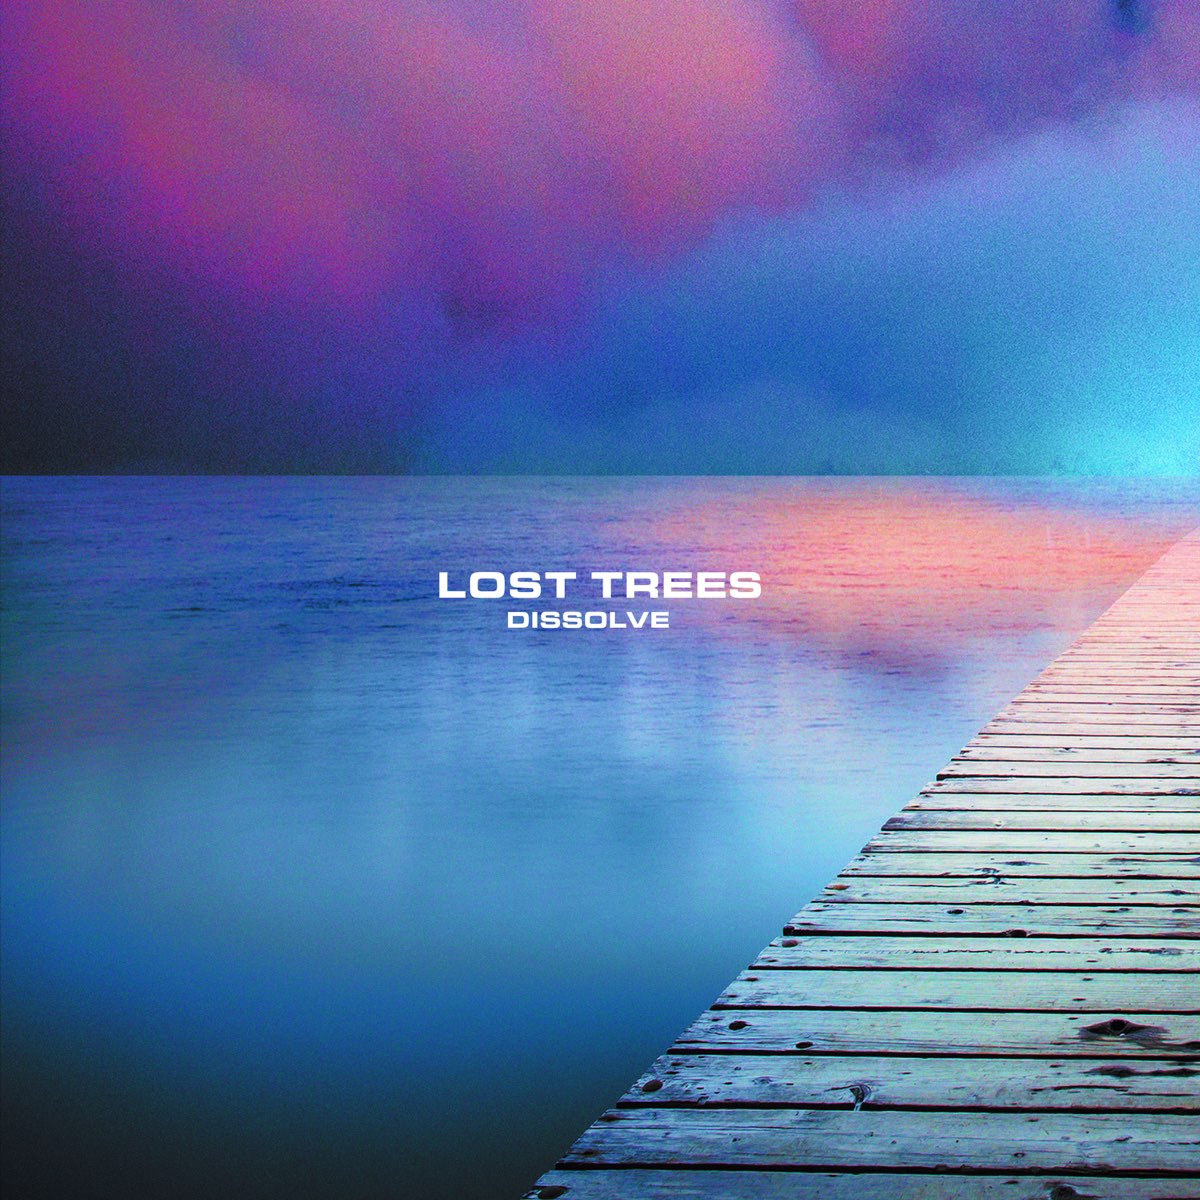 Lost tree